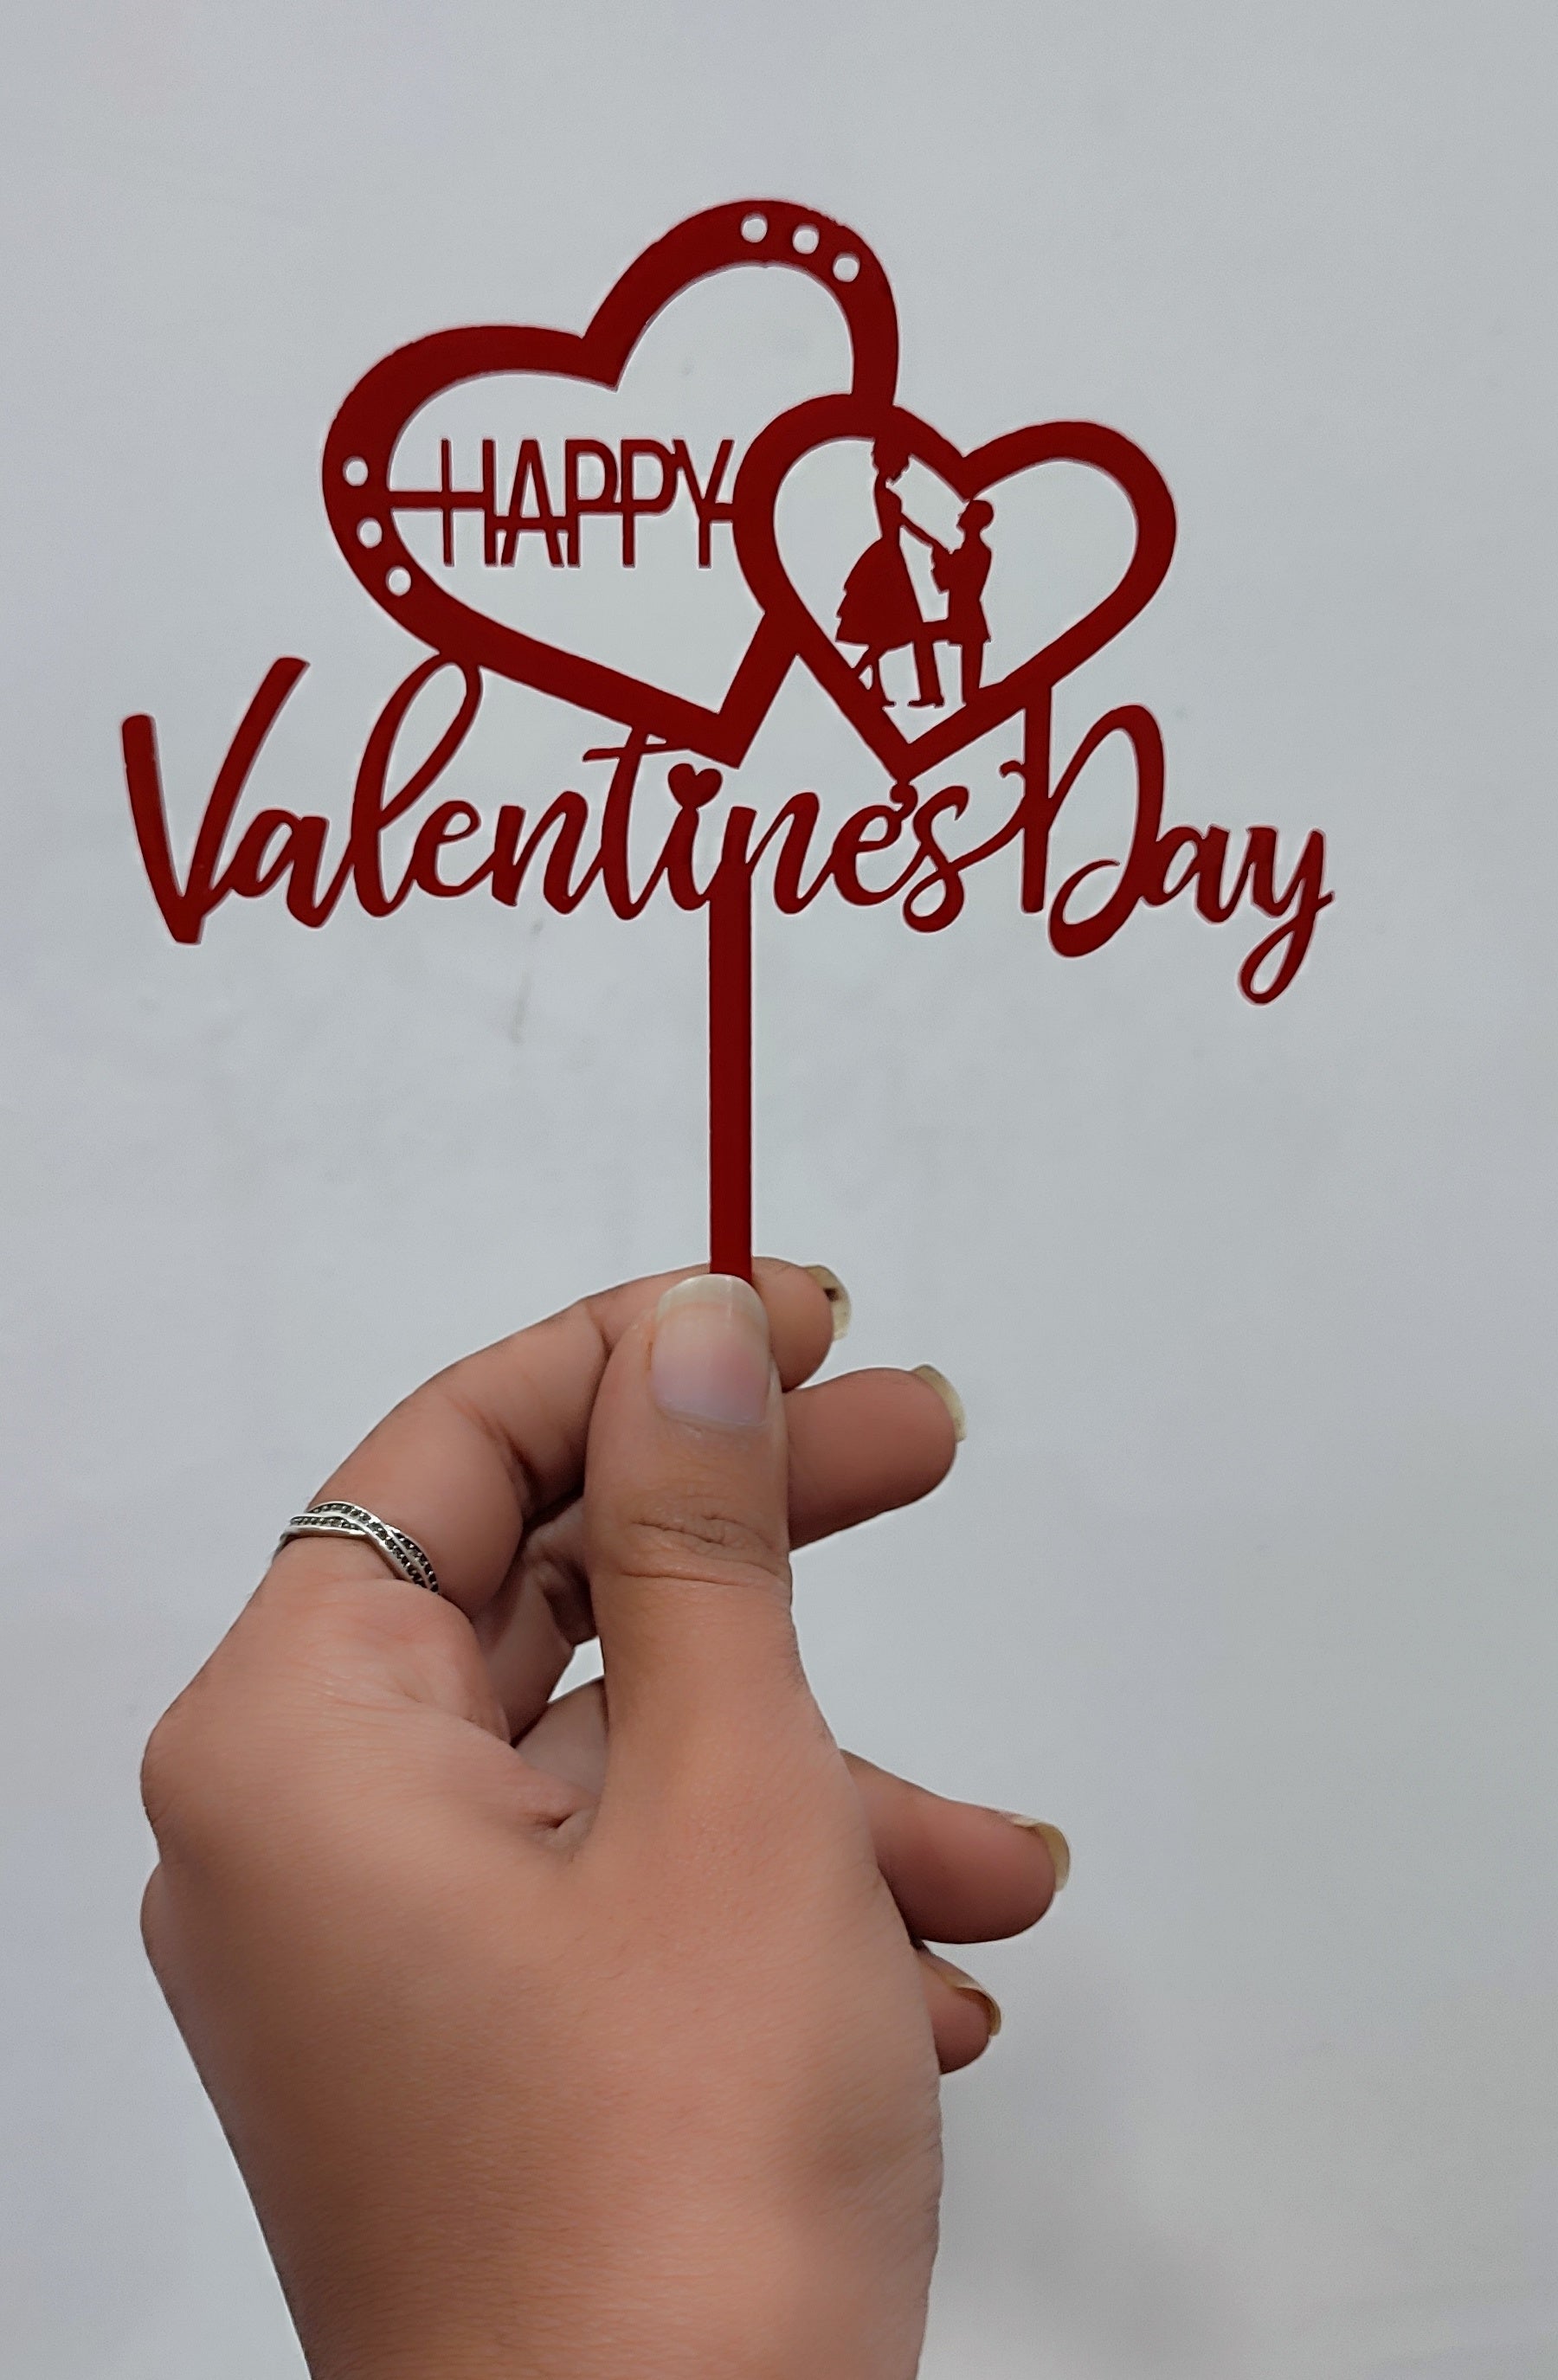 Heart Happy Valentine's day